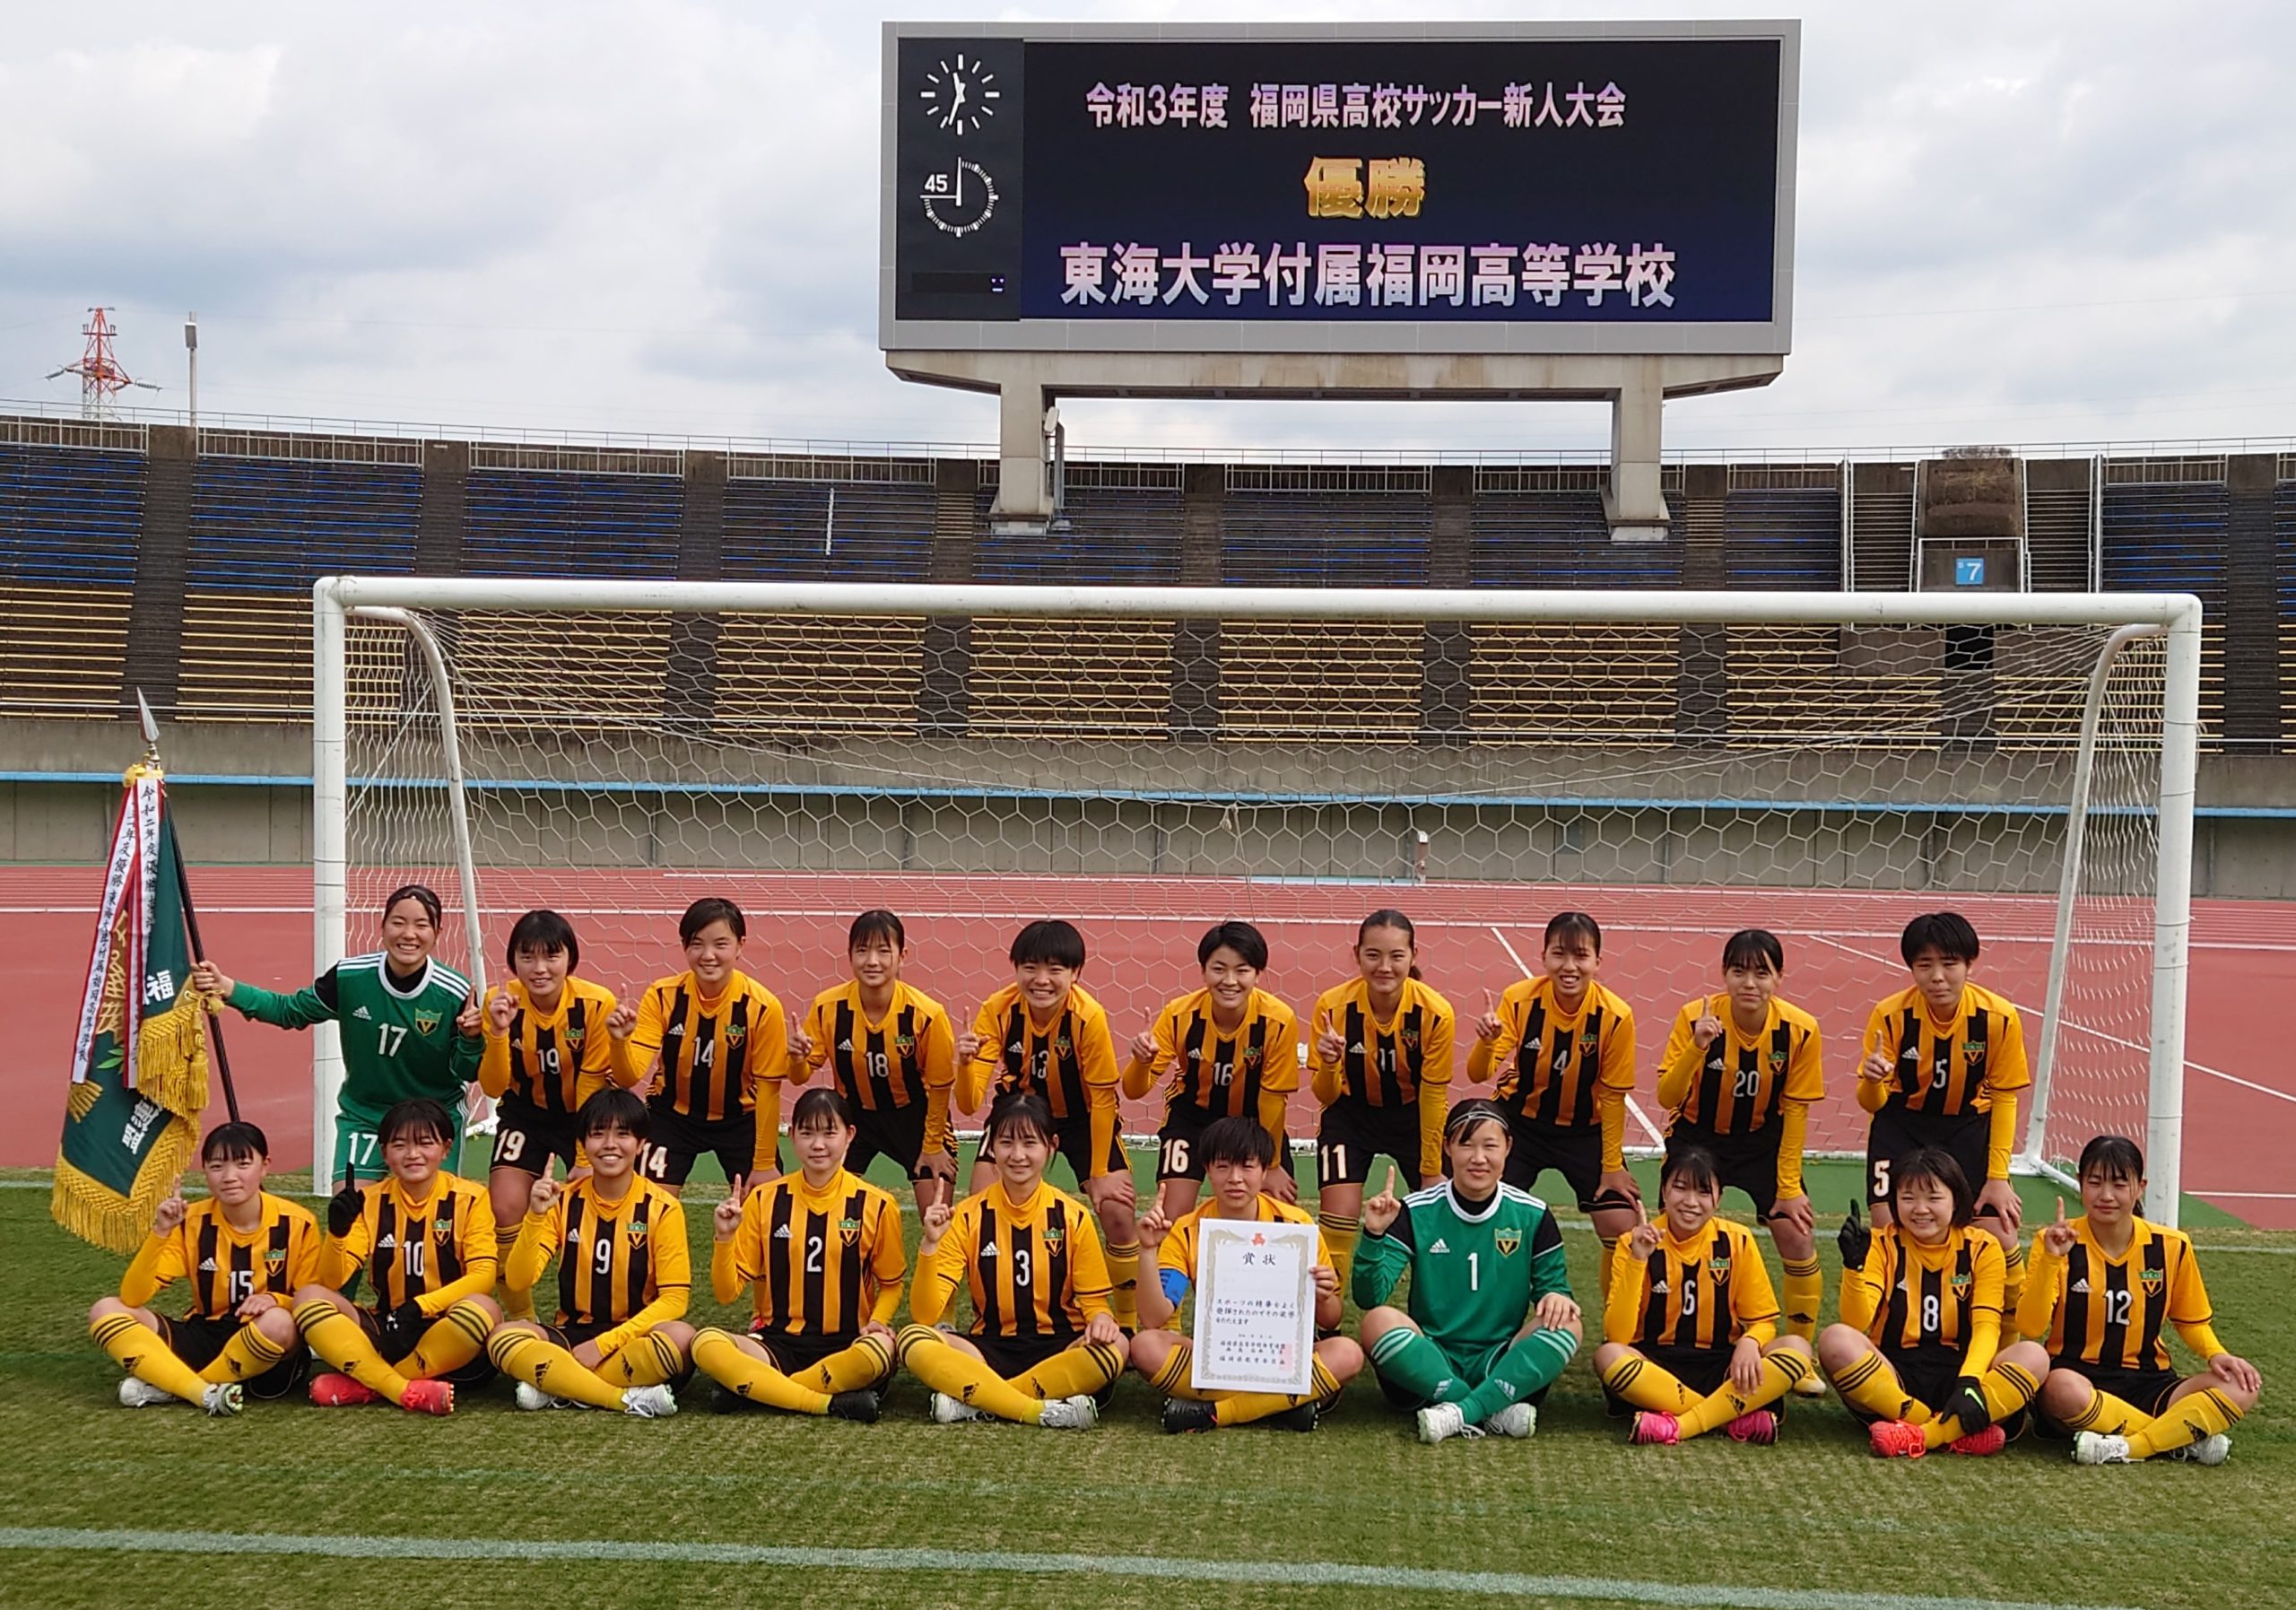 22年1月 東海大学付属福岡高等学校サッカー部 公式hp Tokai Fukuoka Football Club